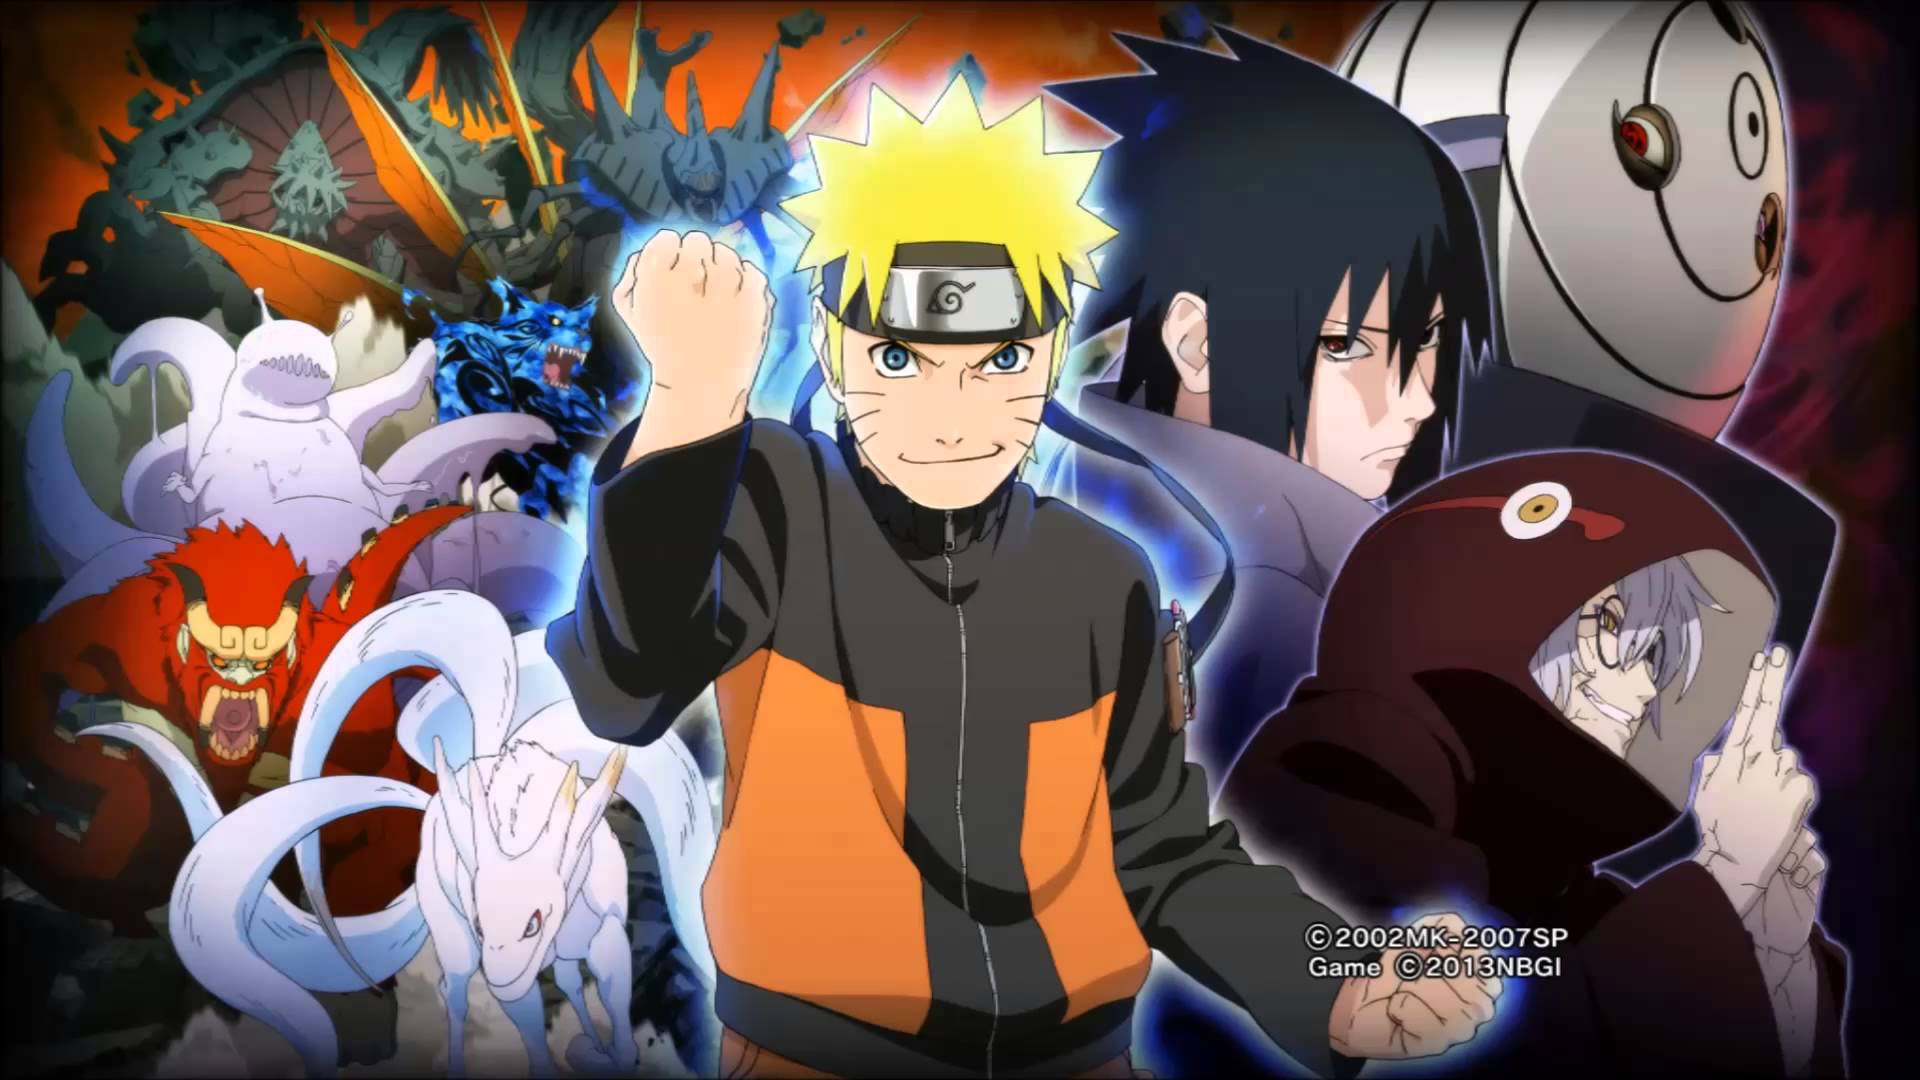 Naruto Shippuden Wallpaper HD Background Image Art